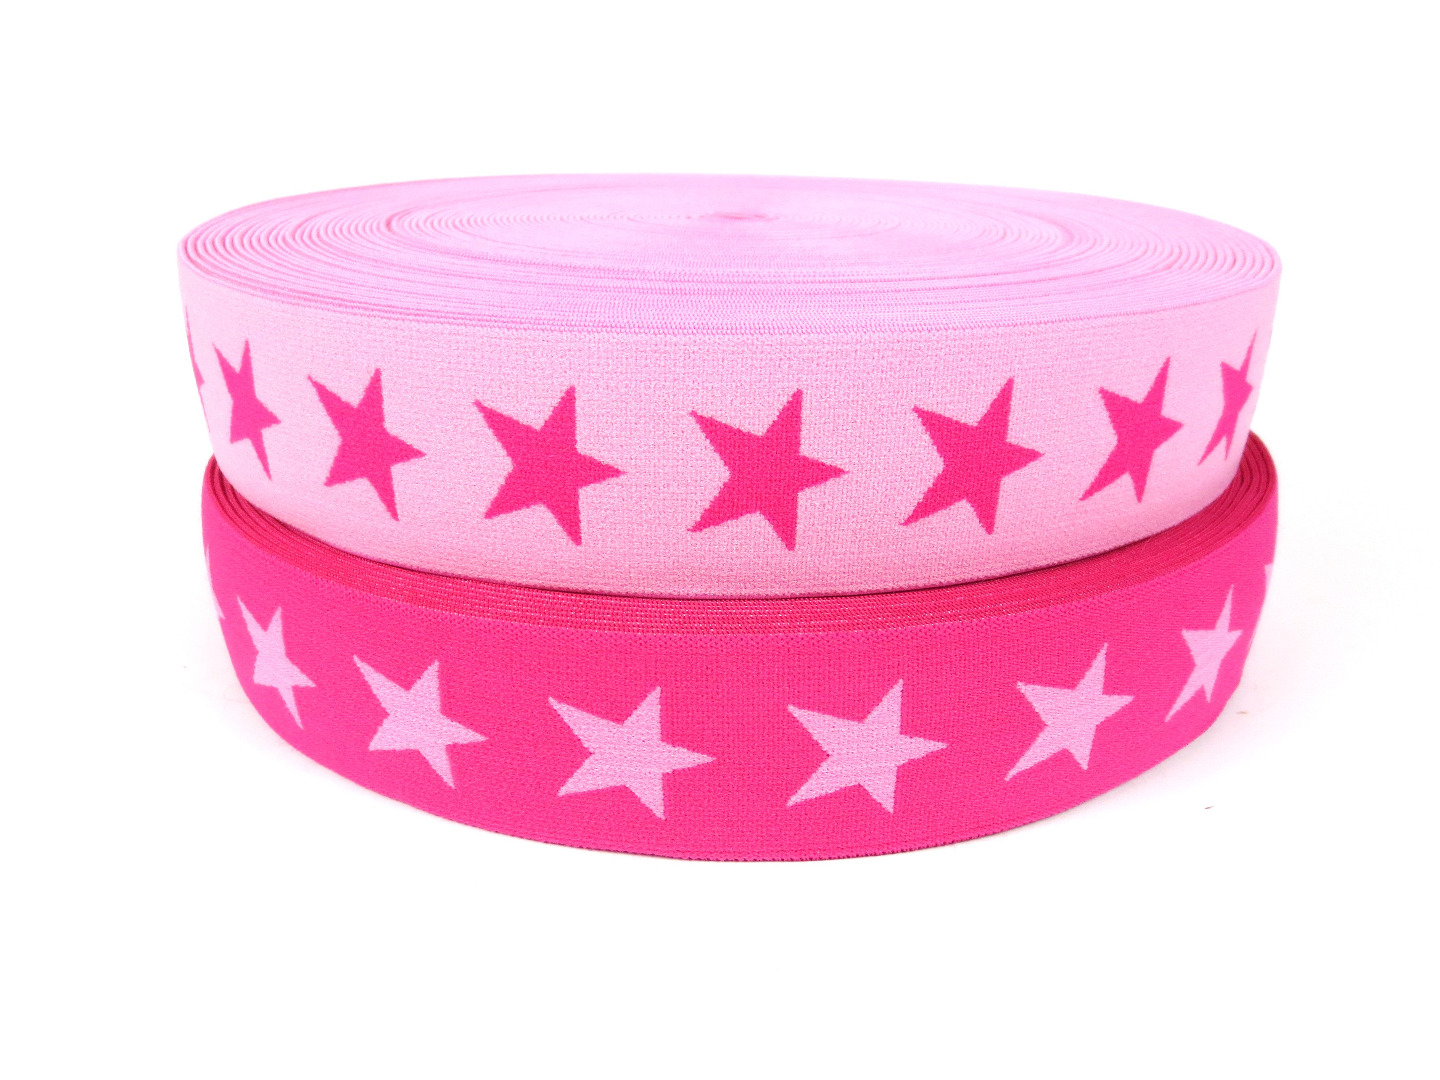 Gummiband Sterne - rosa-dunkelpink - 4 cm Breit 3